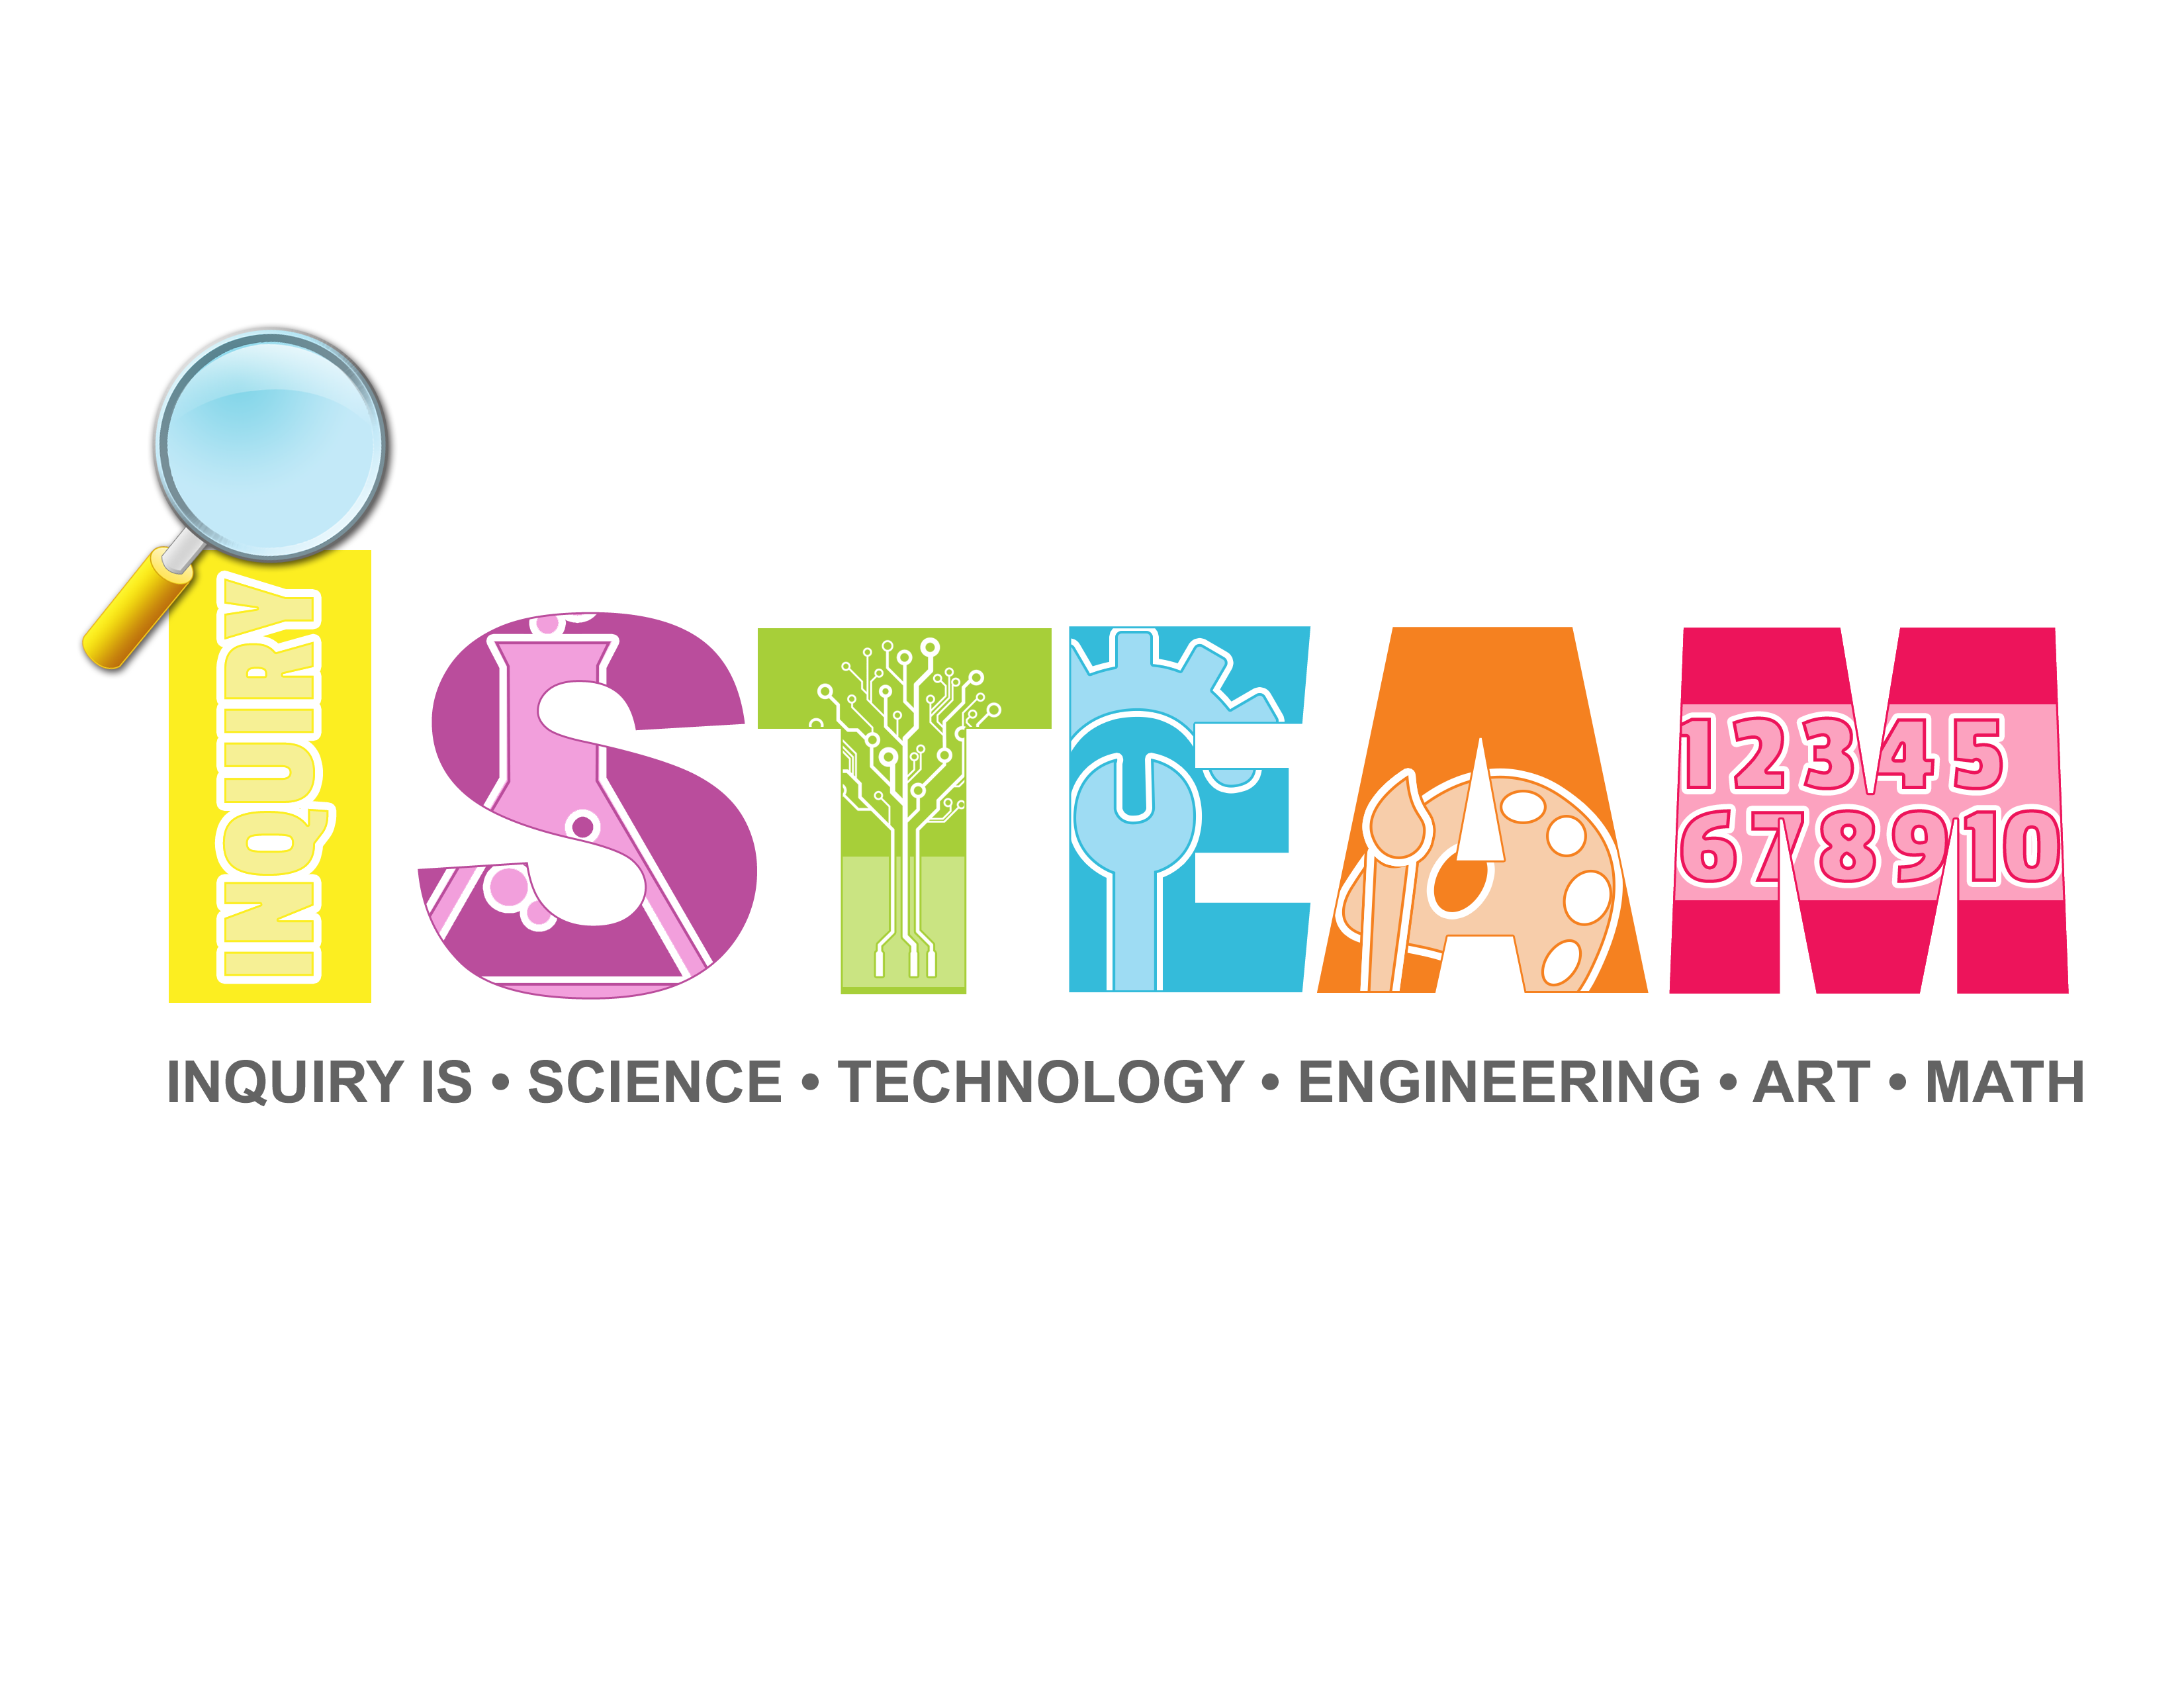 steam stem education